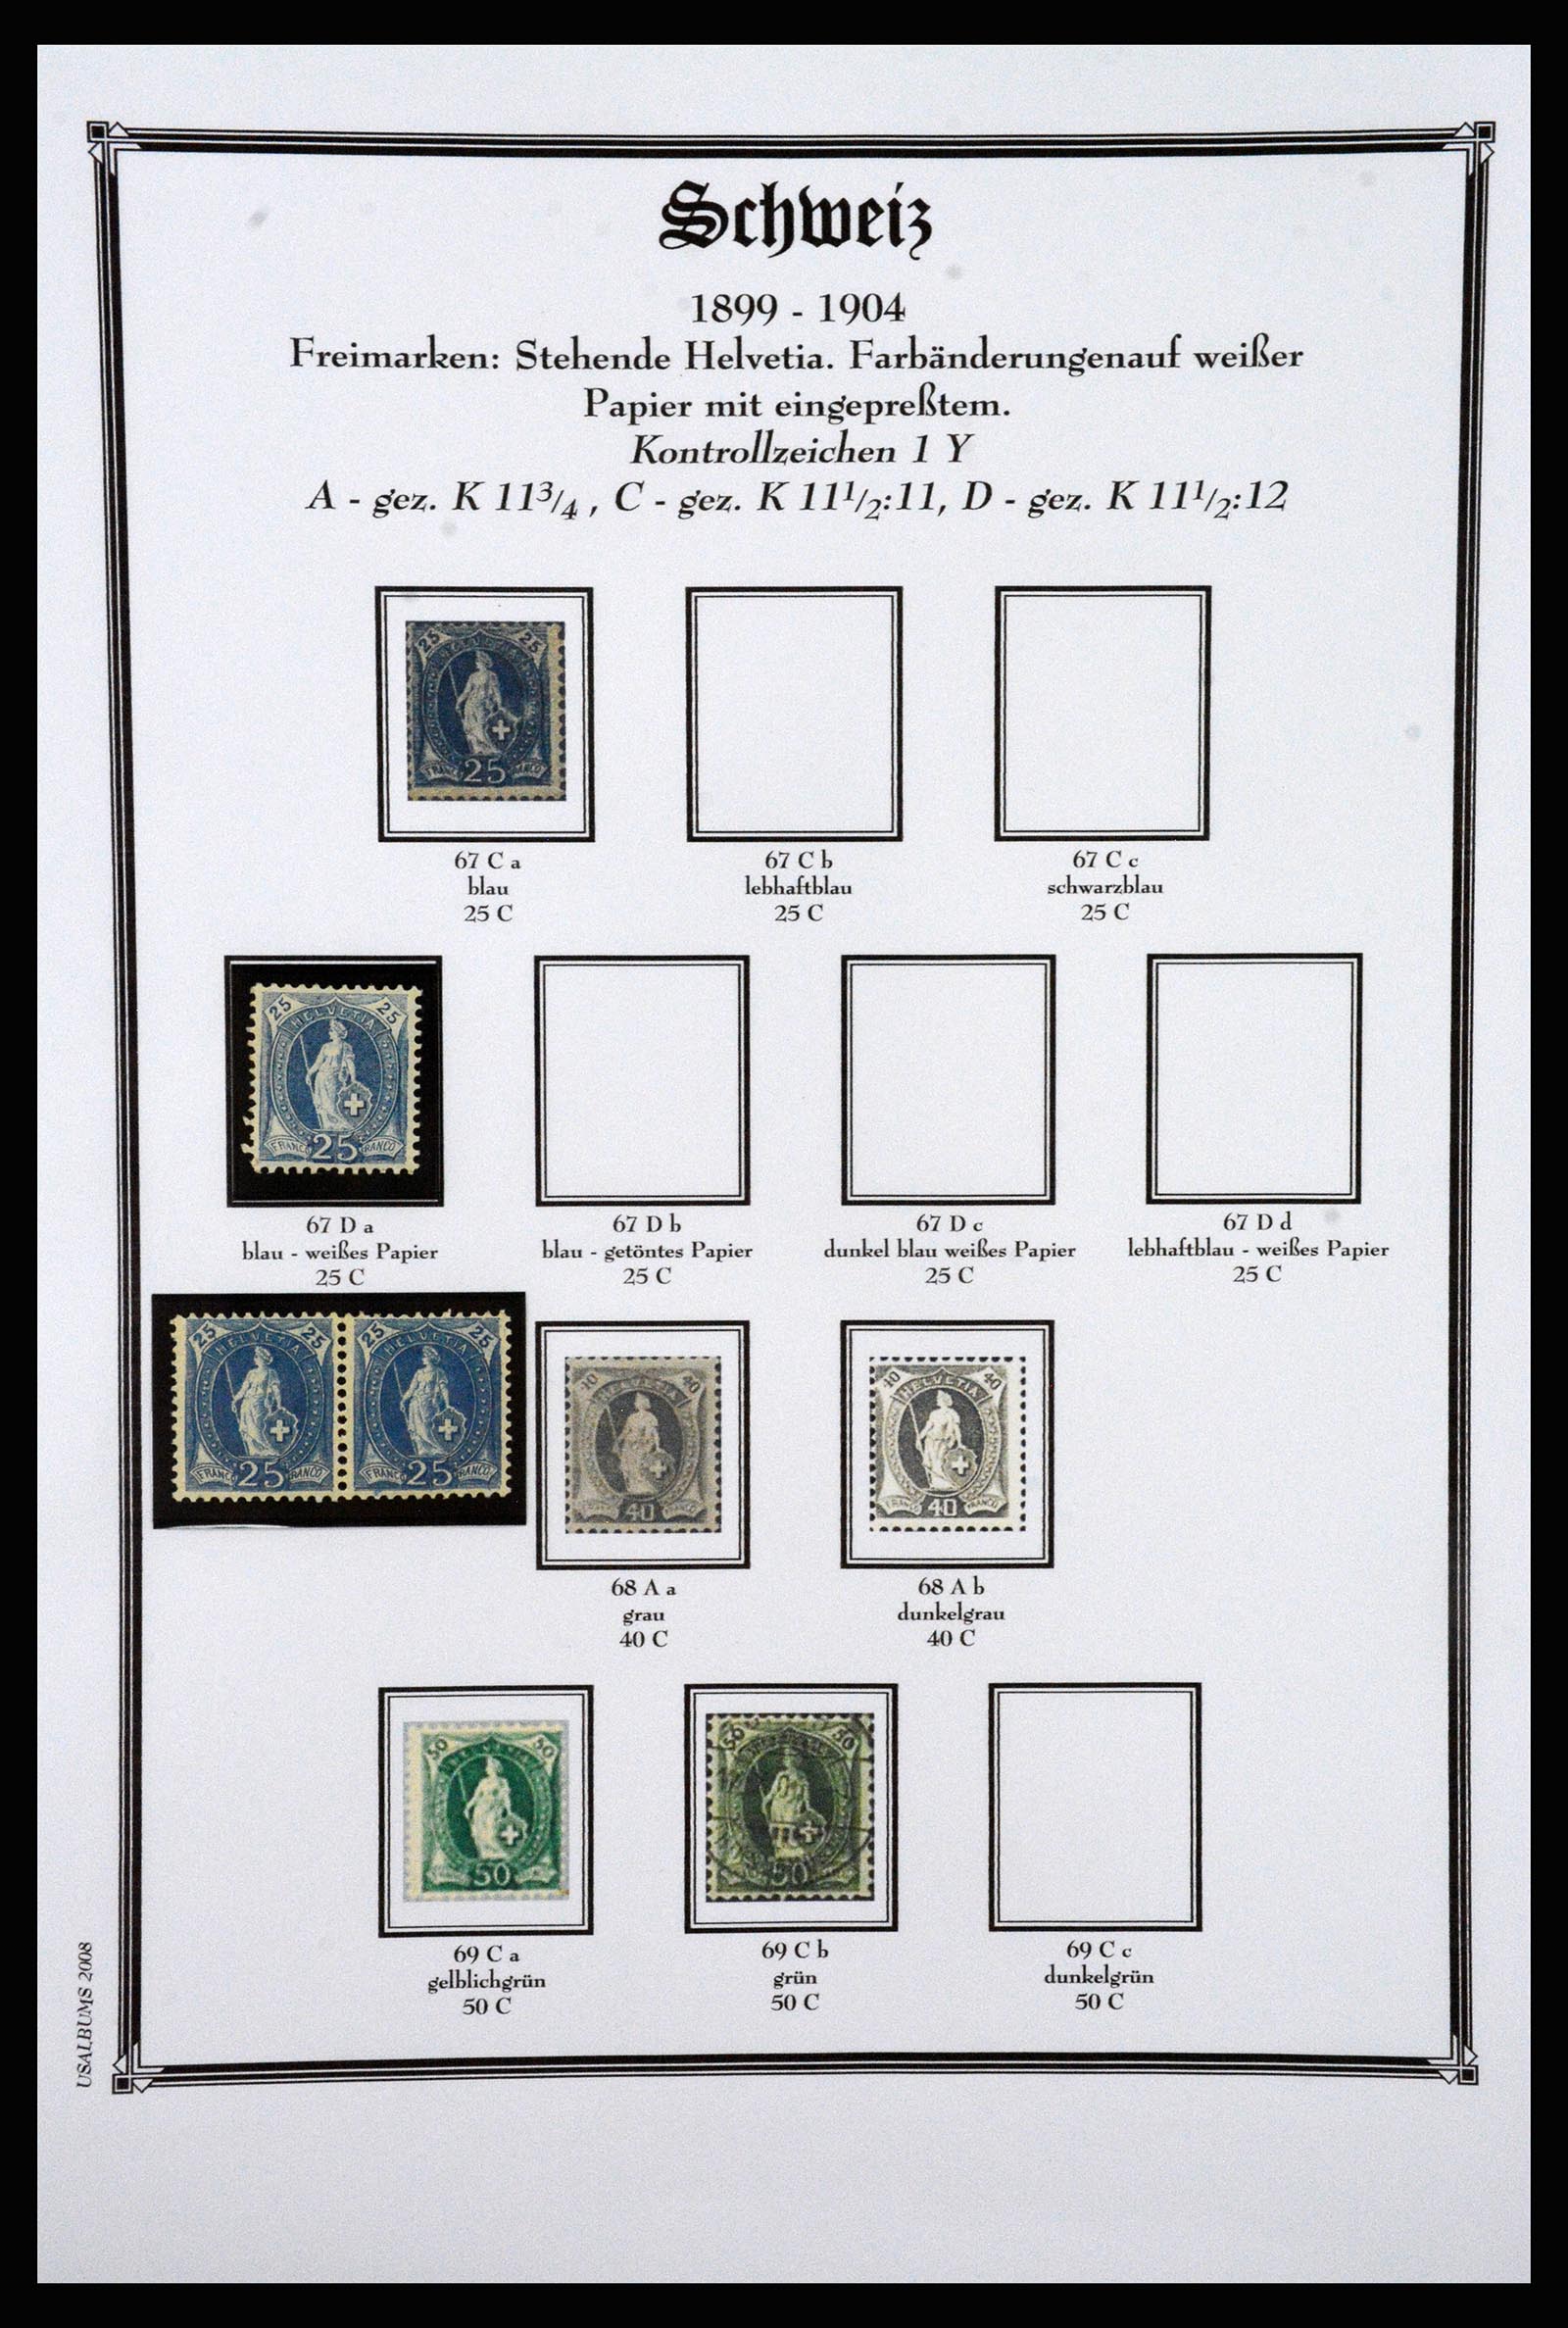 37159 020 - Stamp collection 37159 Switzerland 1862-2000.